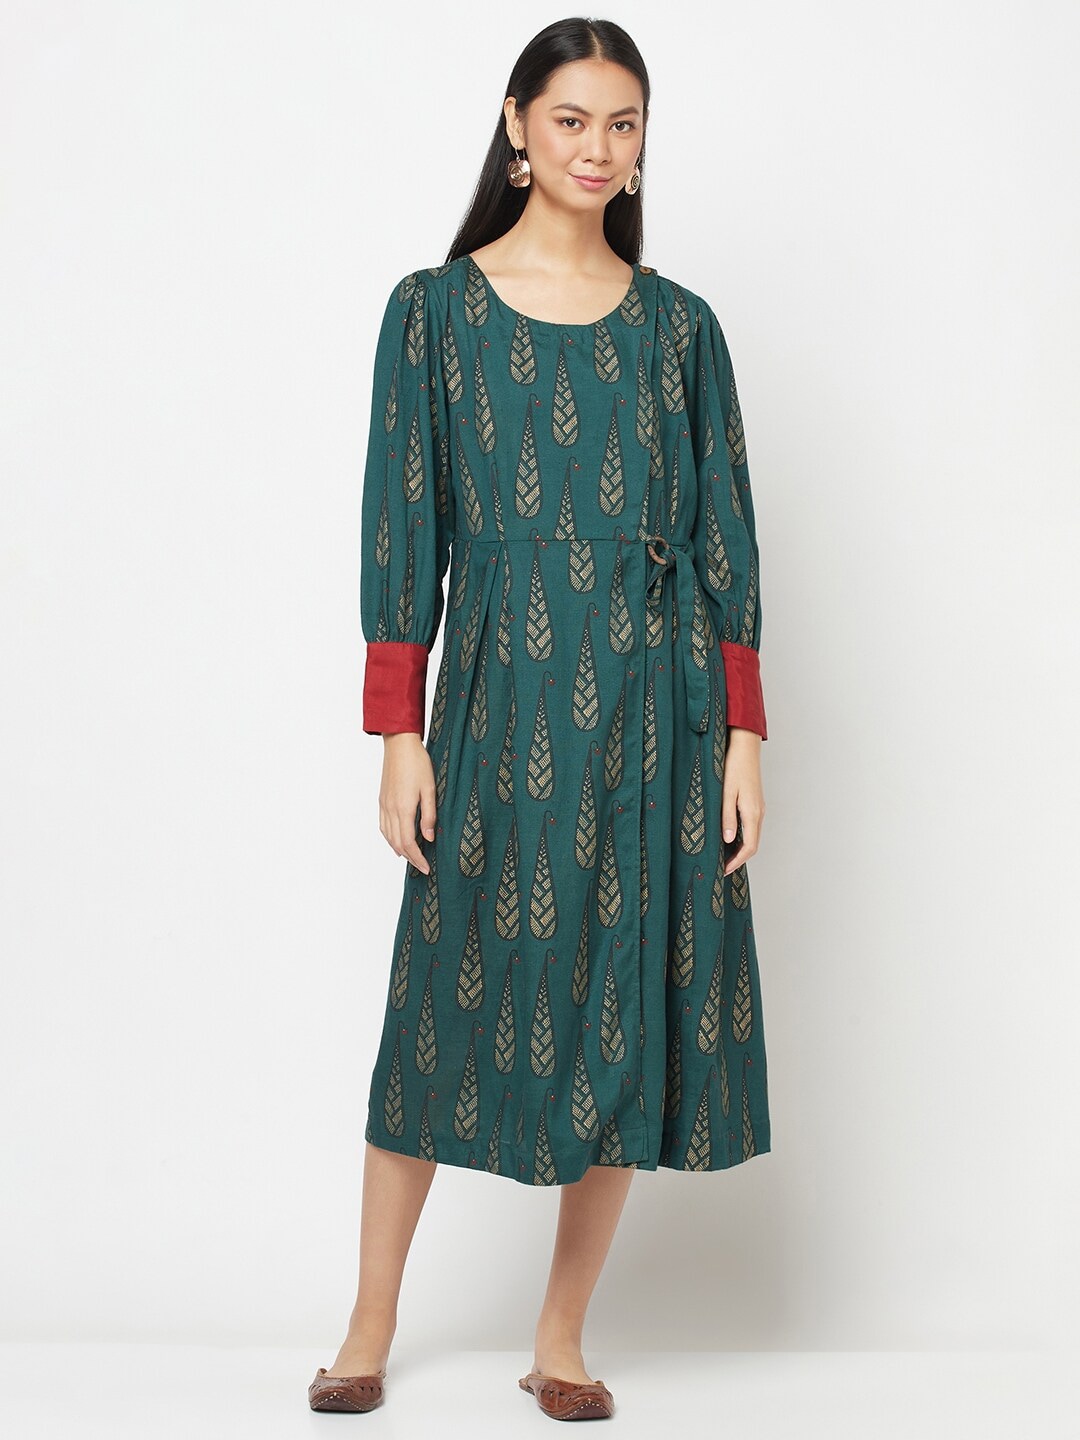 Fabindia Green Ethnic Motifs A-Line Midi Dress Price in India